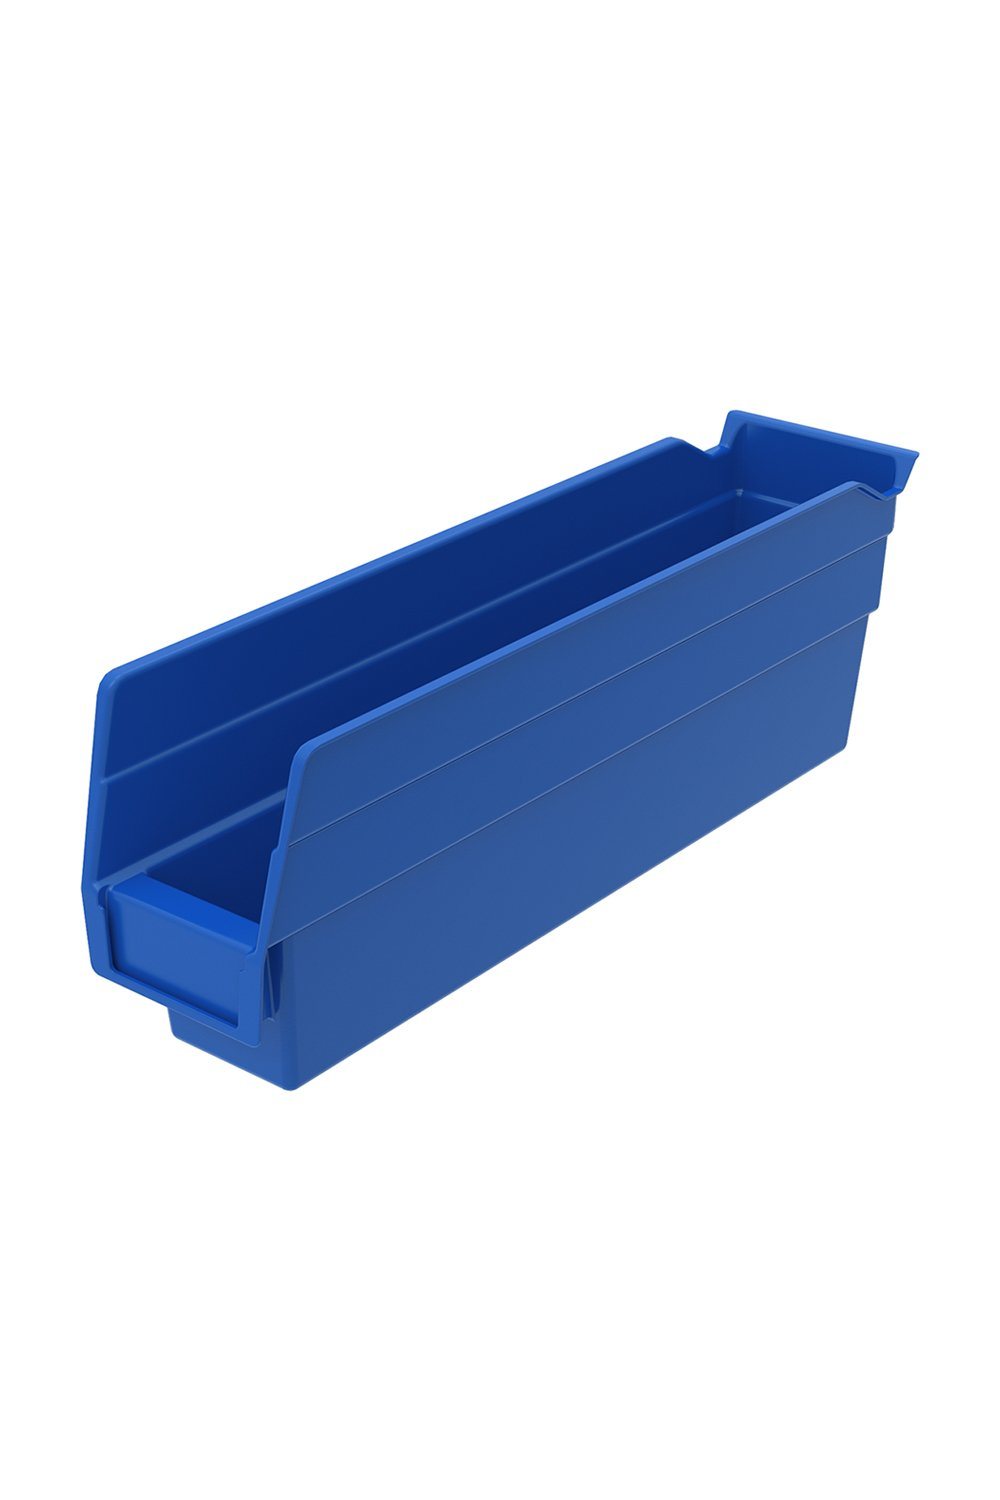 Shelf Bin for 12"D Shelves Bins & Containers Acart 11-5/8'' x 2-3/4'' x 4'' Blue 